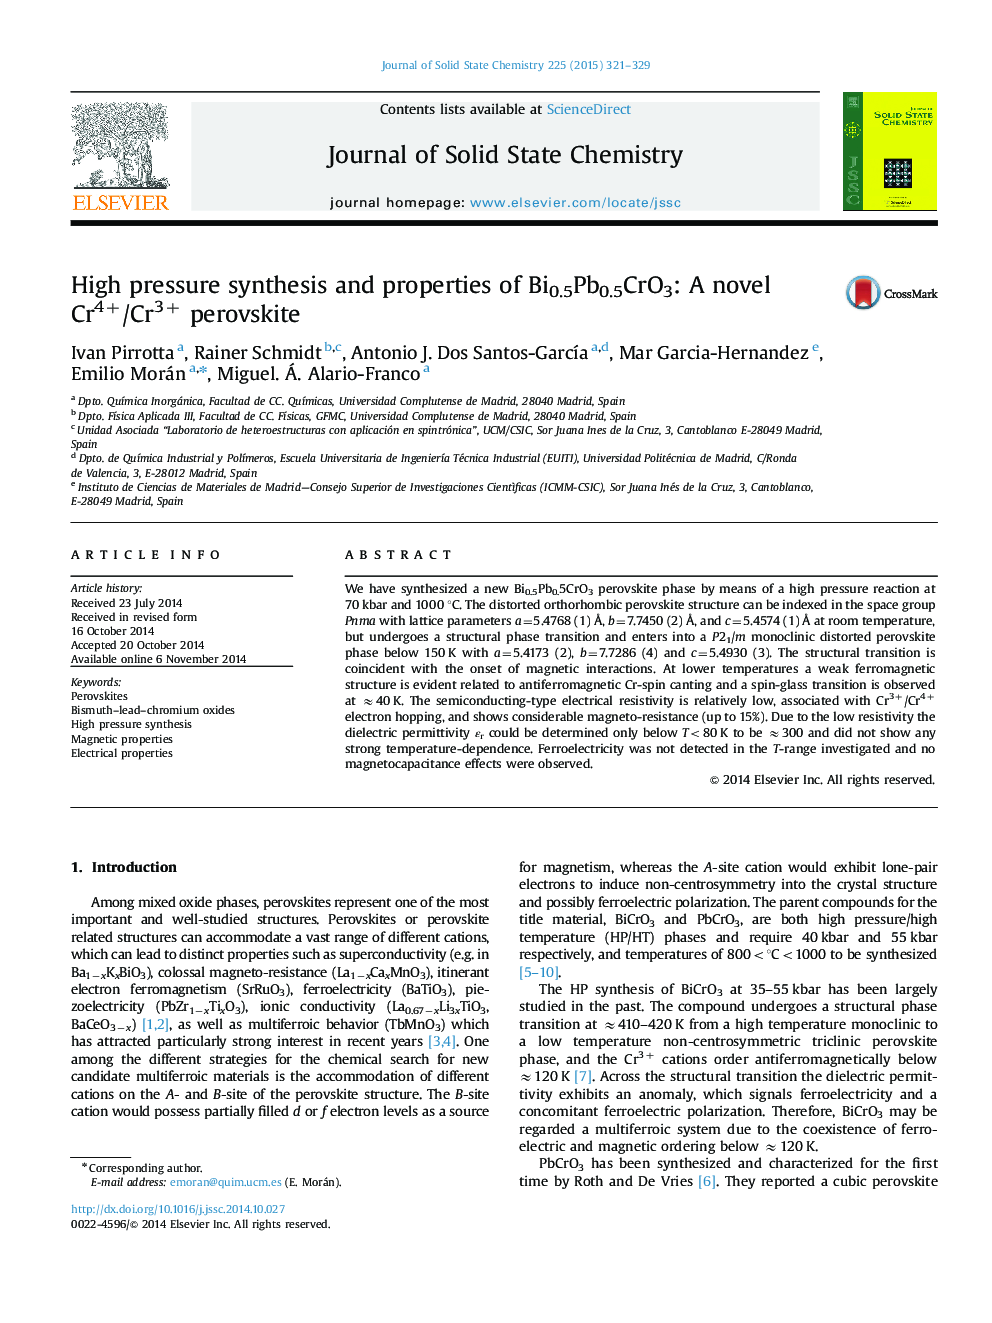 High pressure synthesis and properties of Bi0.5Pb0.5CrO3: A novel Cr4+/Cr3+ perovskite